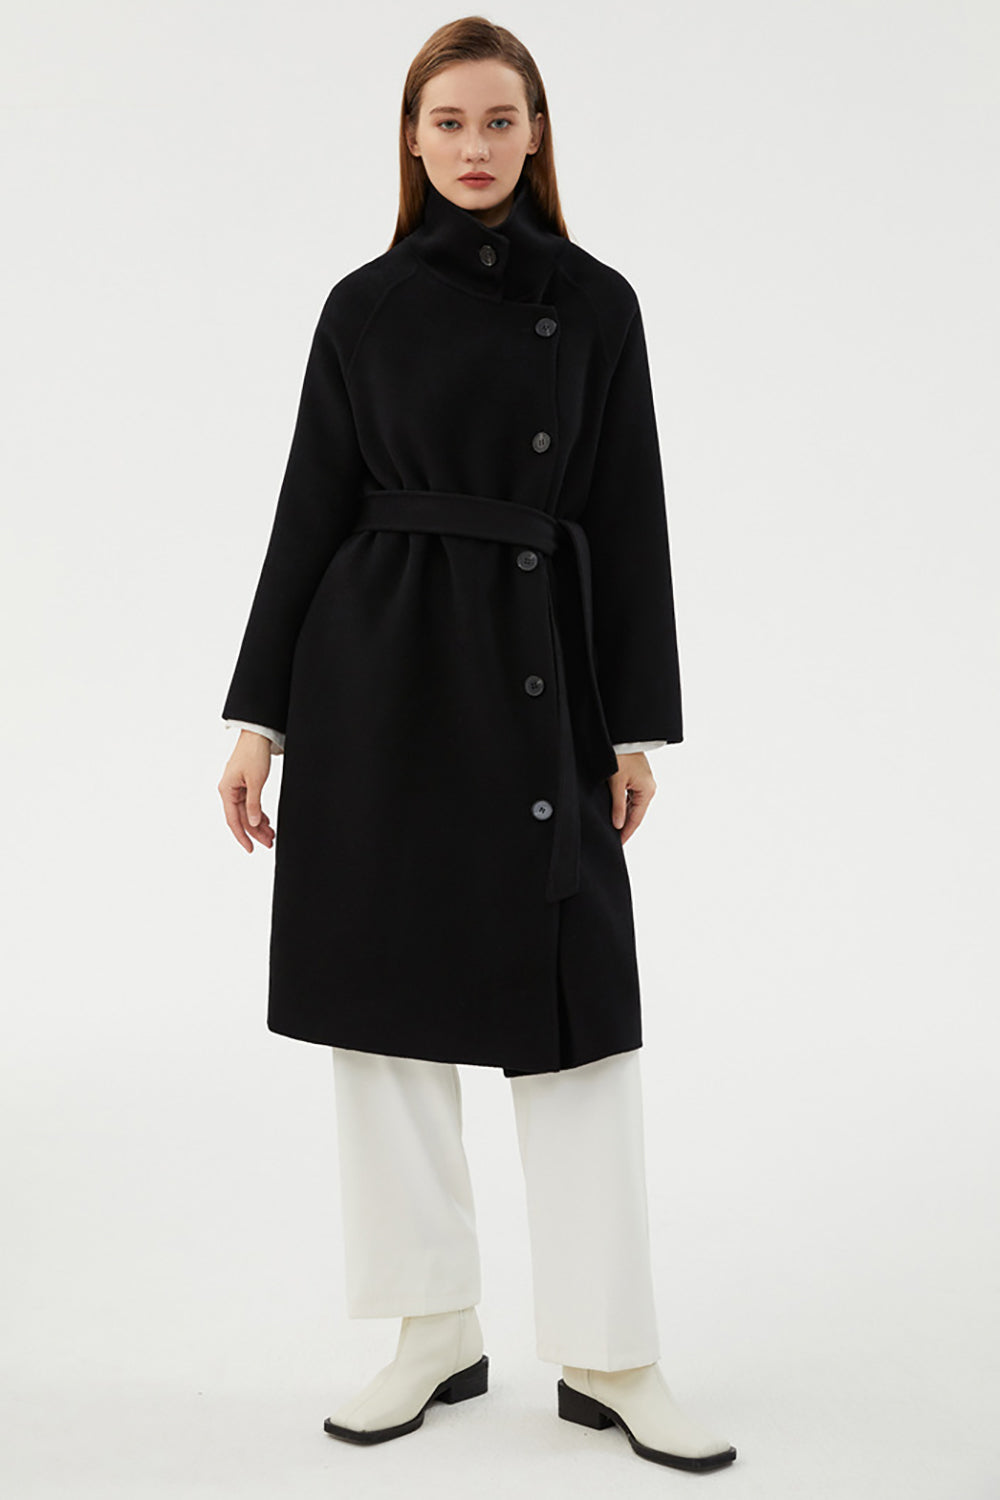 Black Long Double-sided Woolen Coat with Lapels